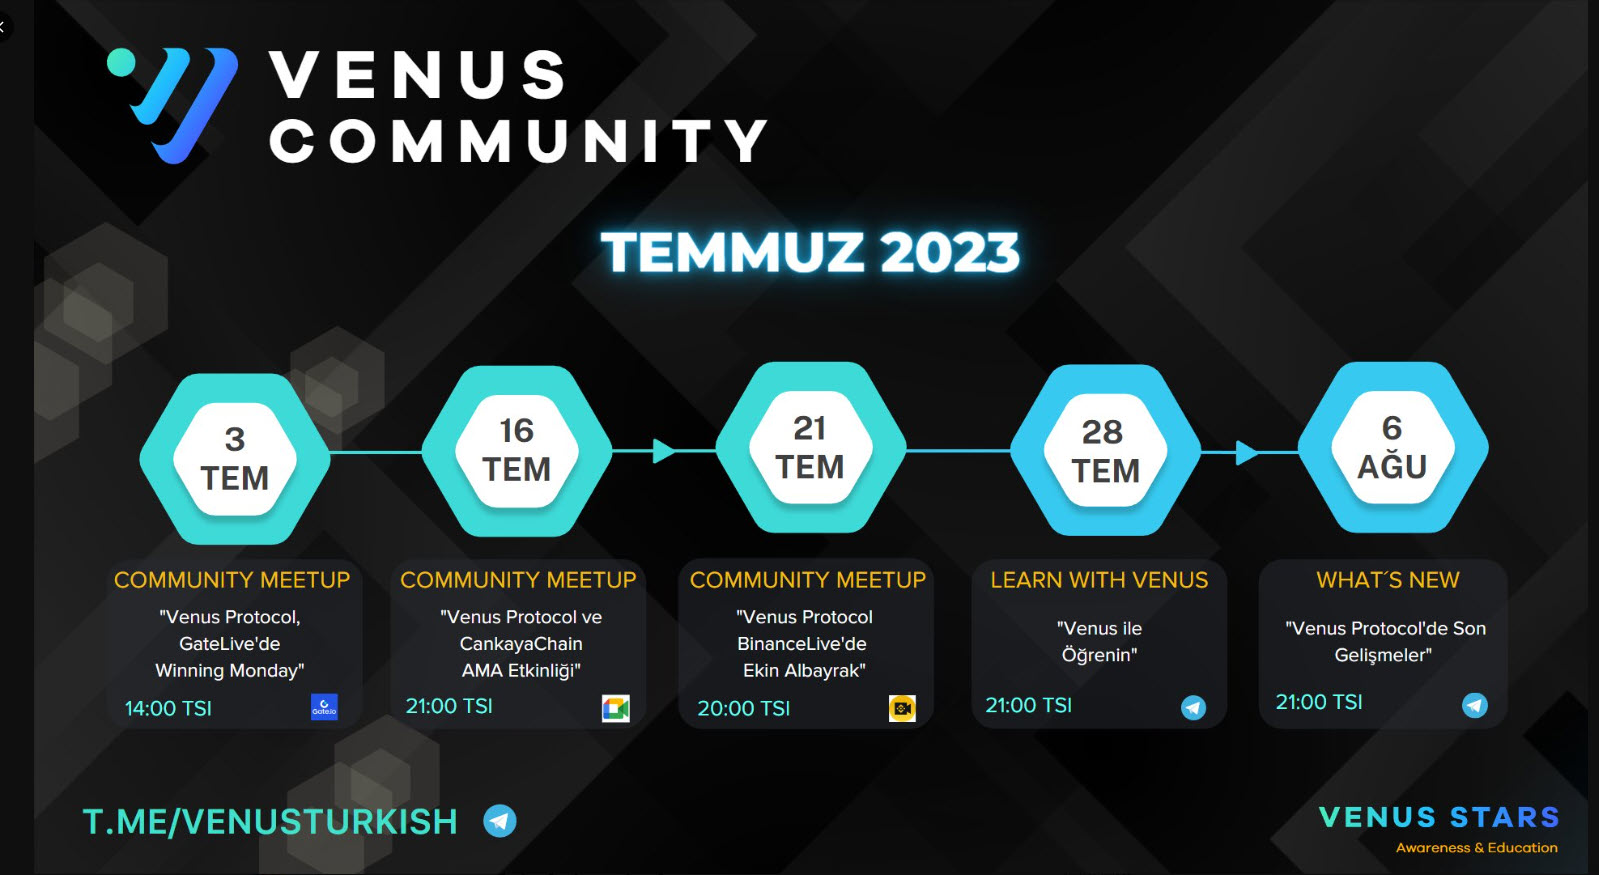 VENUS COMMUNITY TEMMUZ 2023